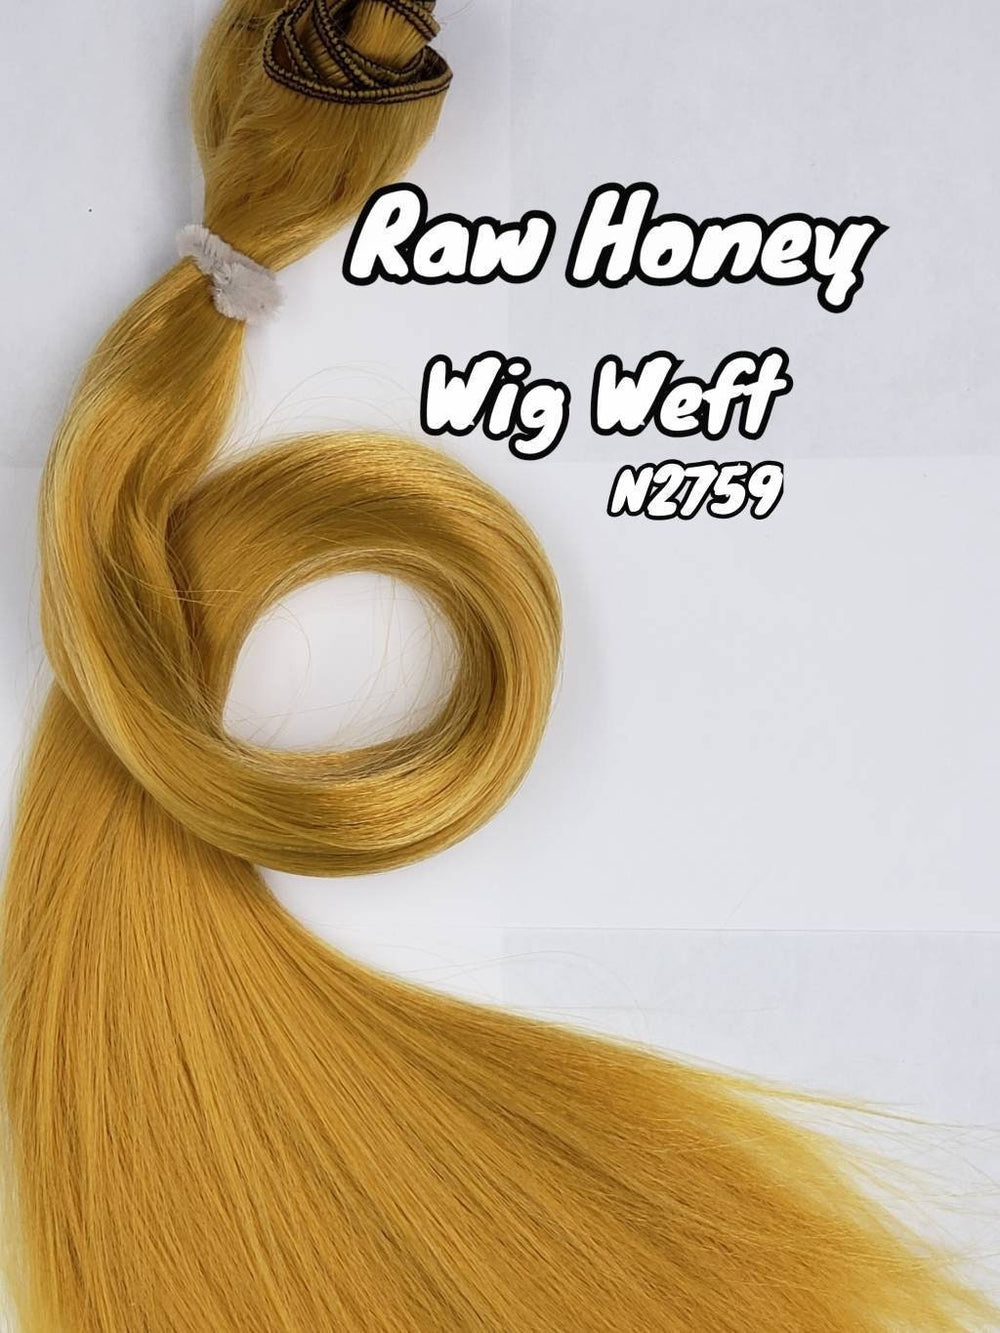 DG-HQ™ Wig Weft Nylon Raw Honey N2759 Dark Blonde Nylon Weft 30"Wx20"L Doll Hair for Making Fashion Doll Wigs Standard Temperature